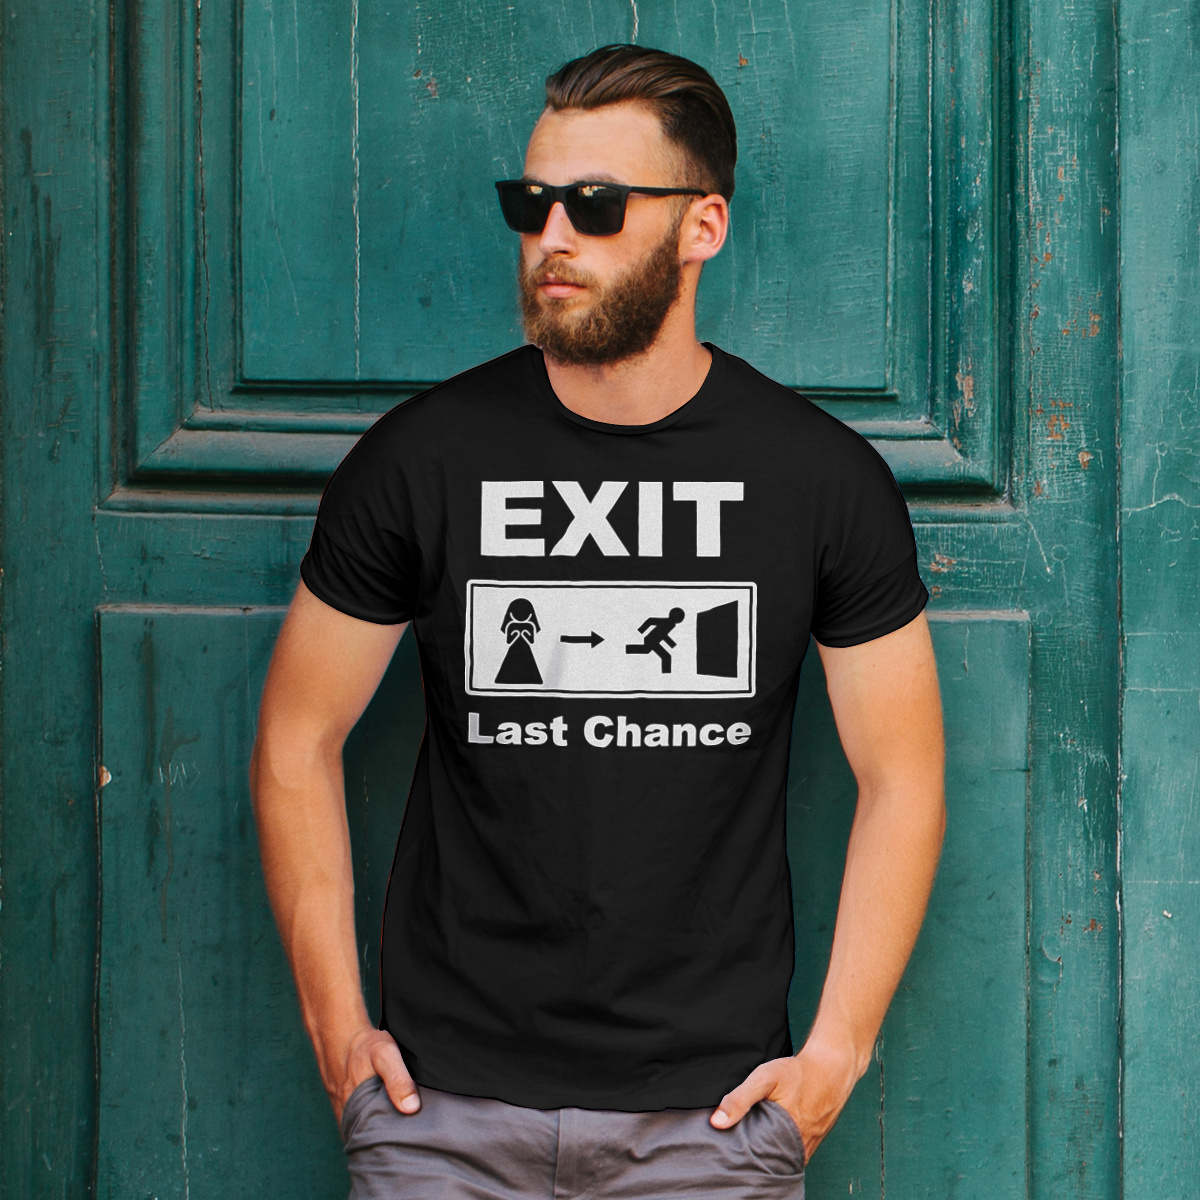 EXIT- Last Chance - Wieczór kawalerski - Męska Koszulka Czarna